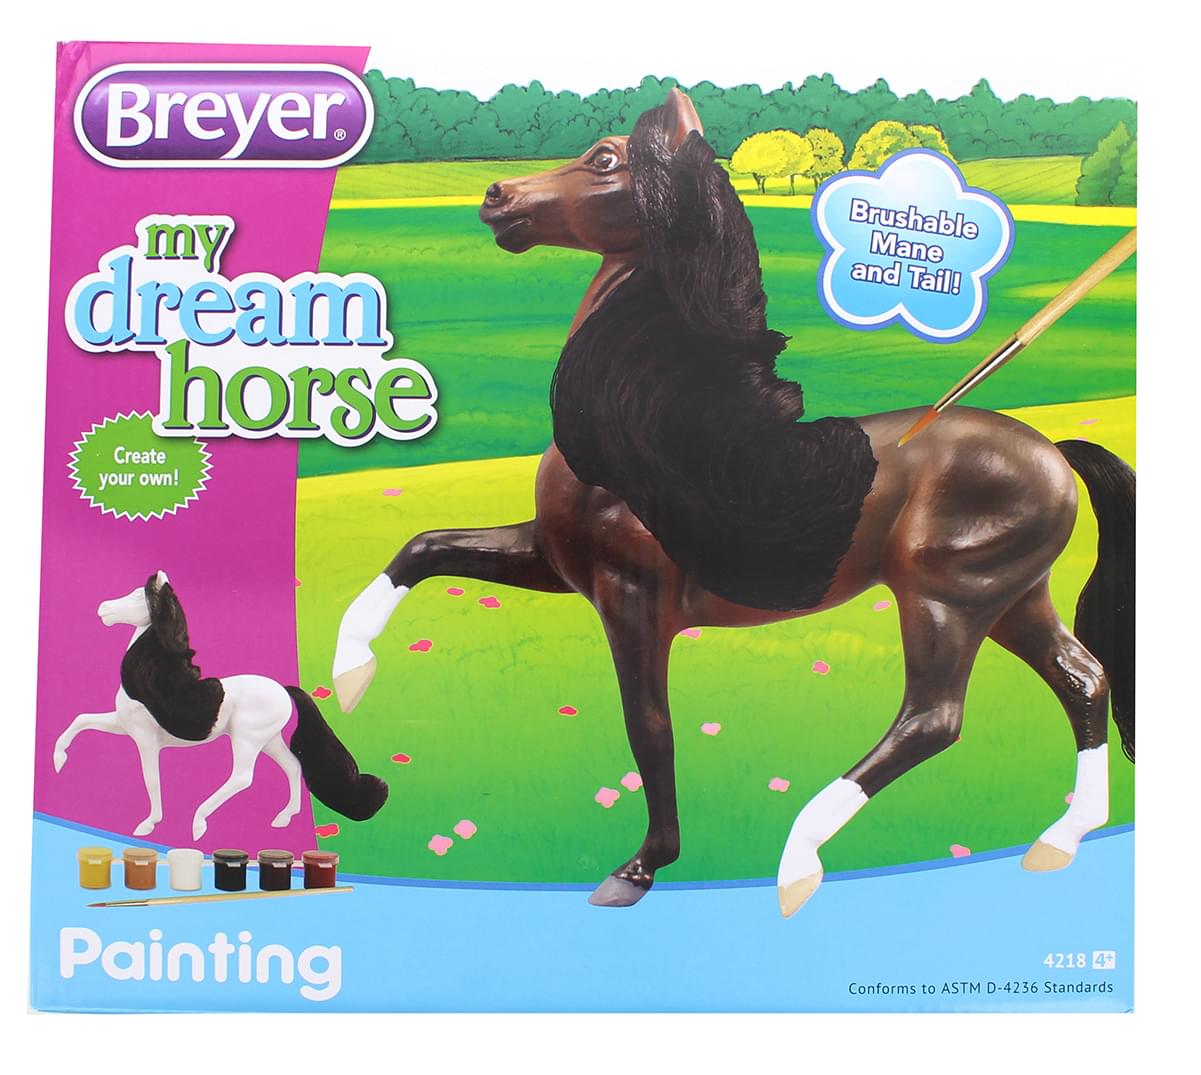 Breyer Model Horse Painting Kit W/ Brushable Mane & Tail